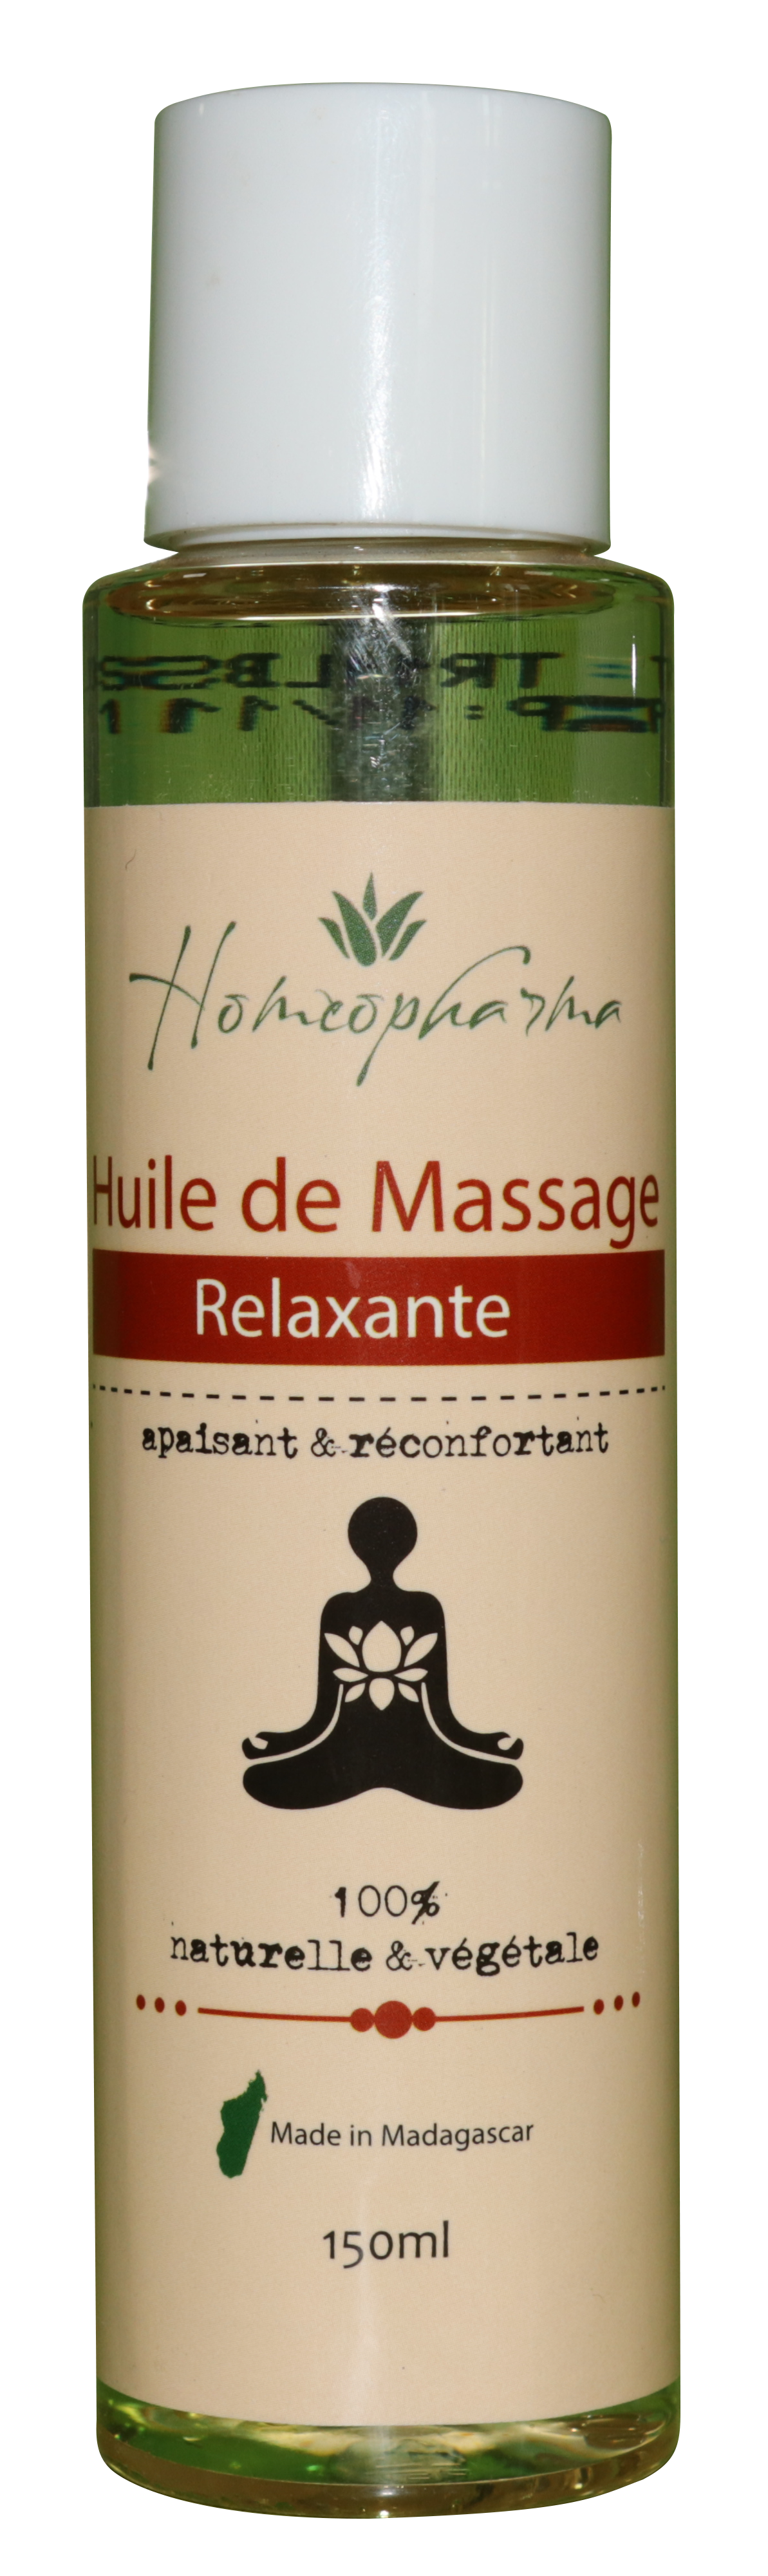 Huile de massage Relaxante - 150ml